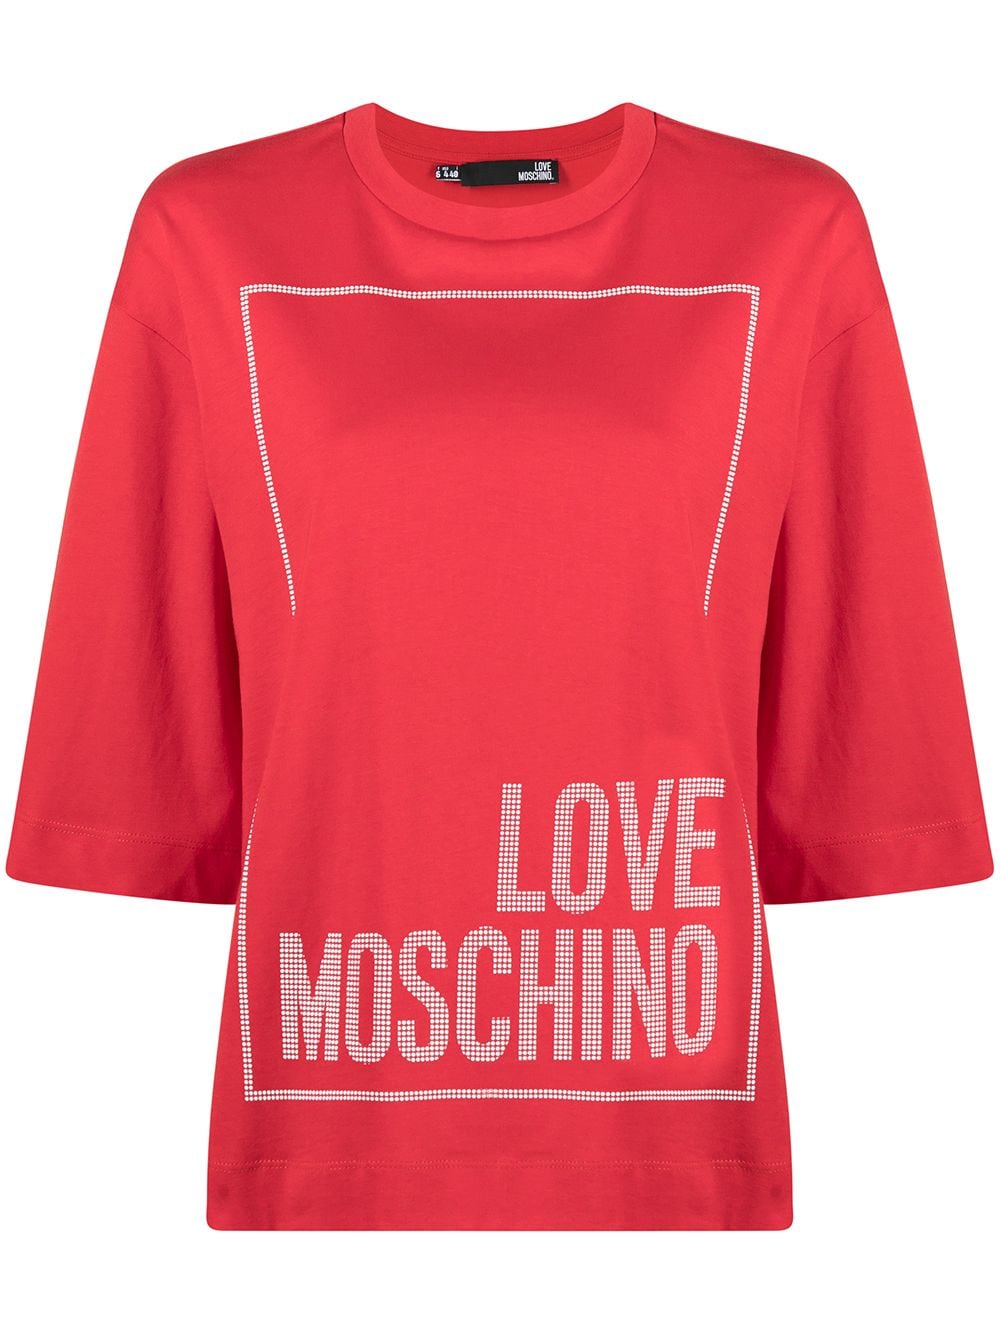 фото Love moschino футболка с логотипом